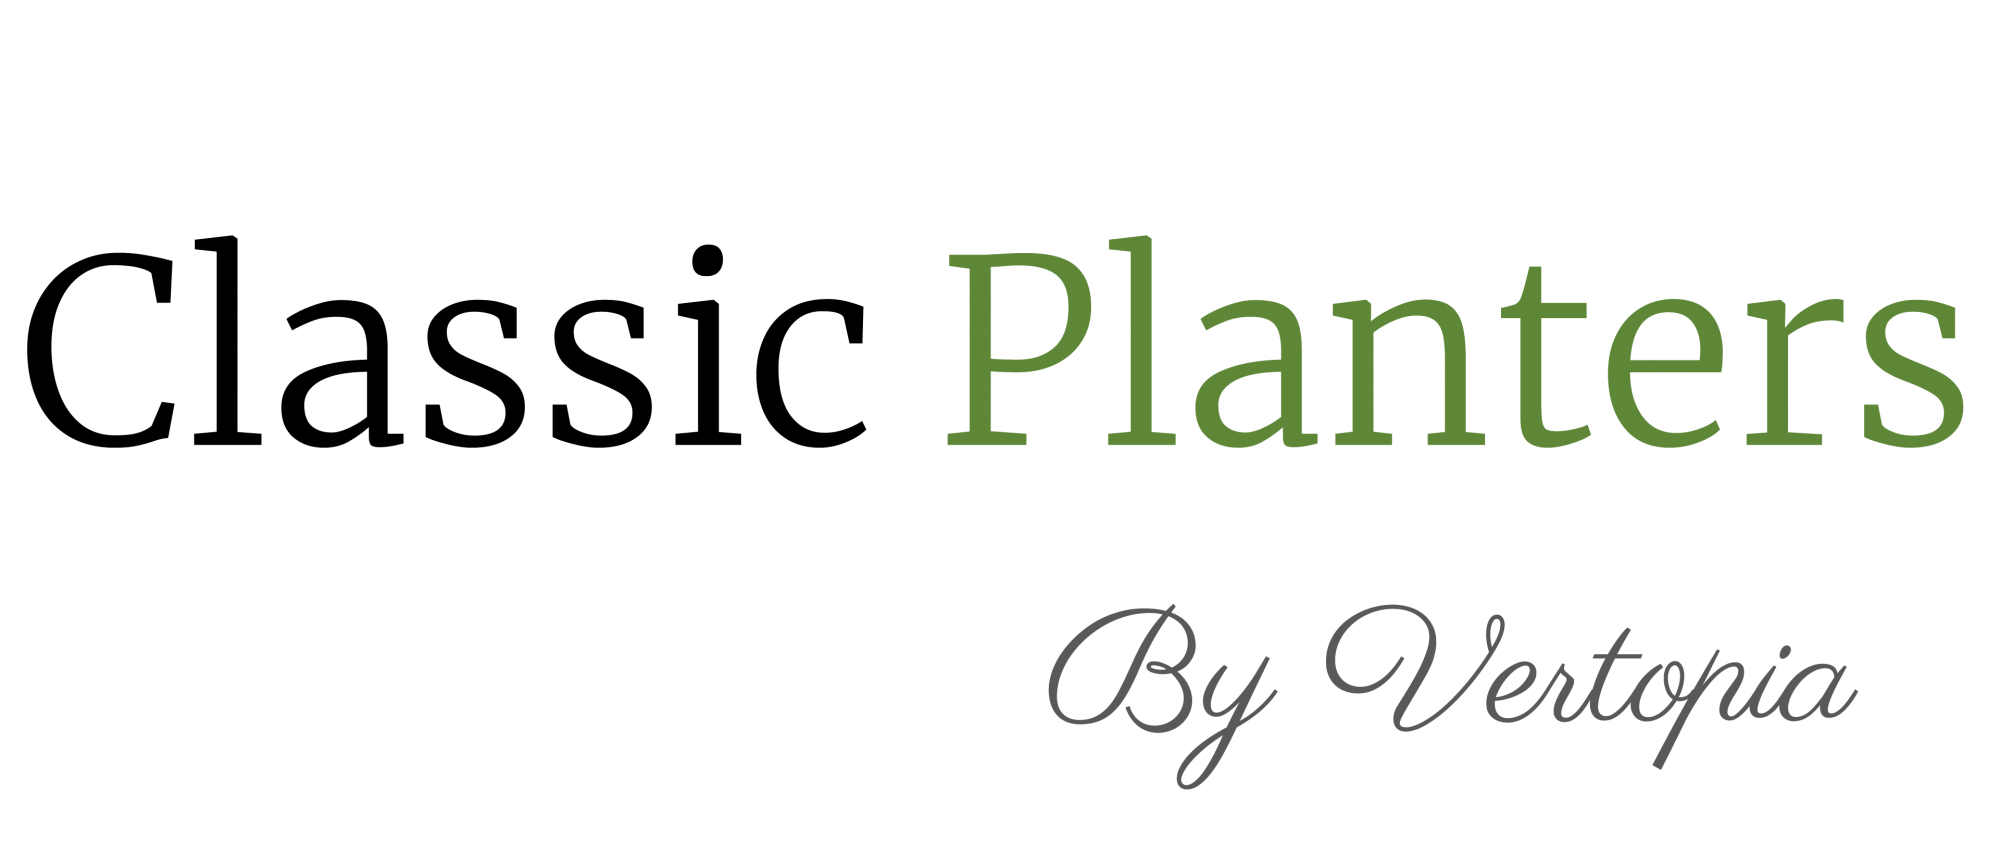 Classic Planters Works Logo